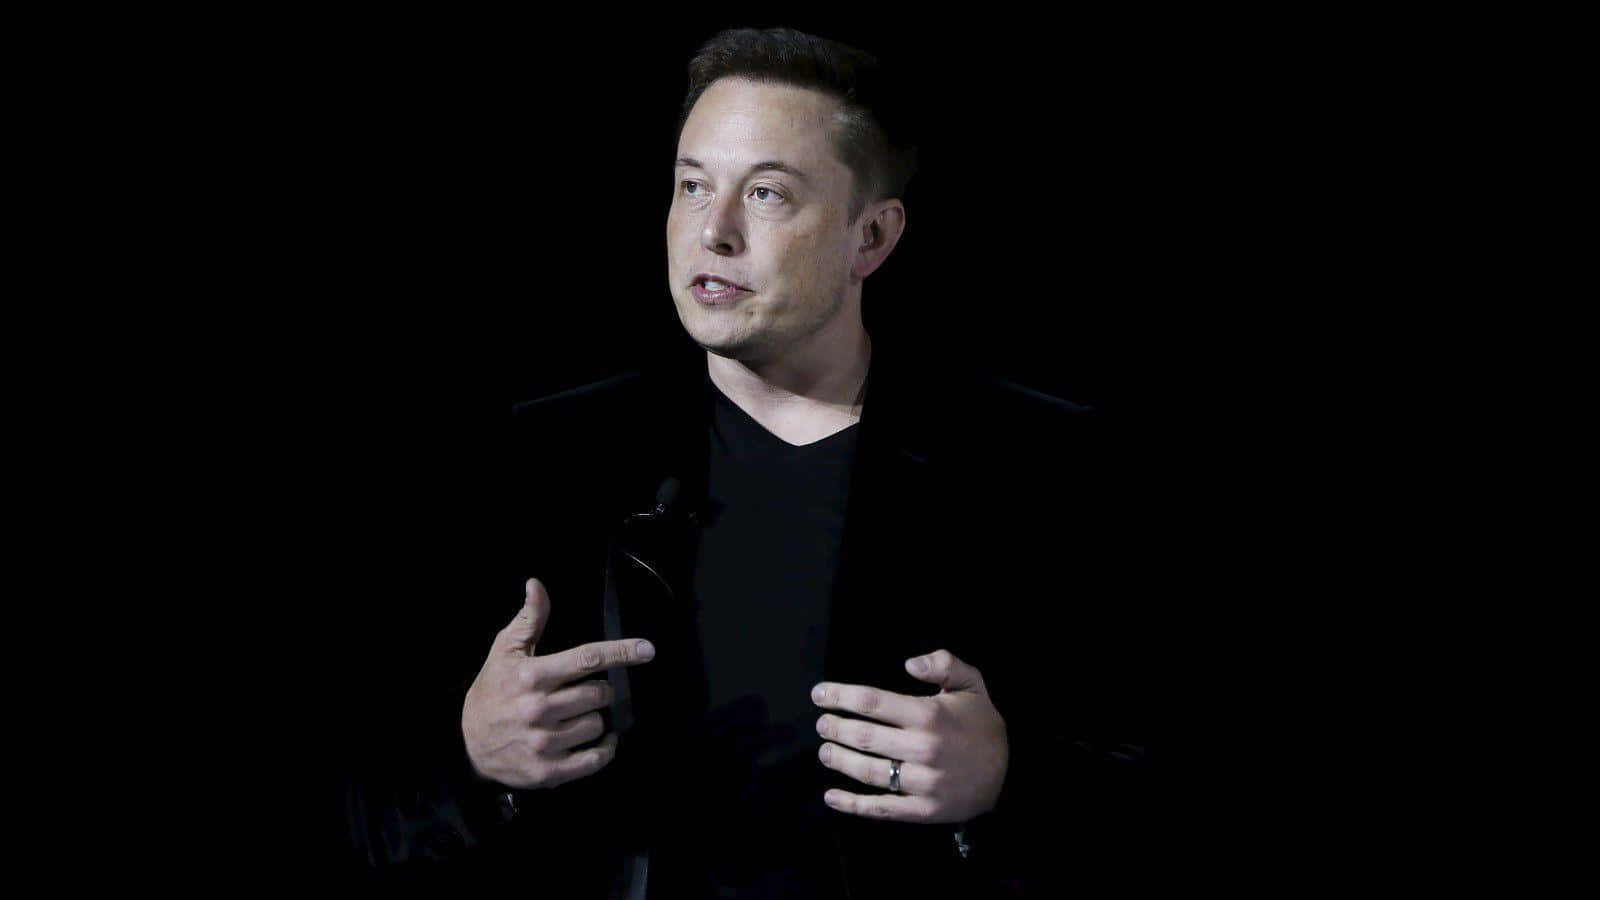 "Inventor, Investor and Entrepreneur; Elon Musk"